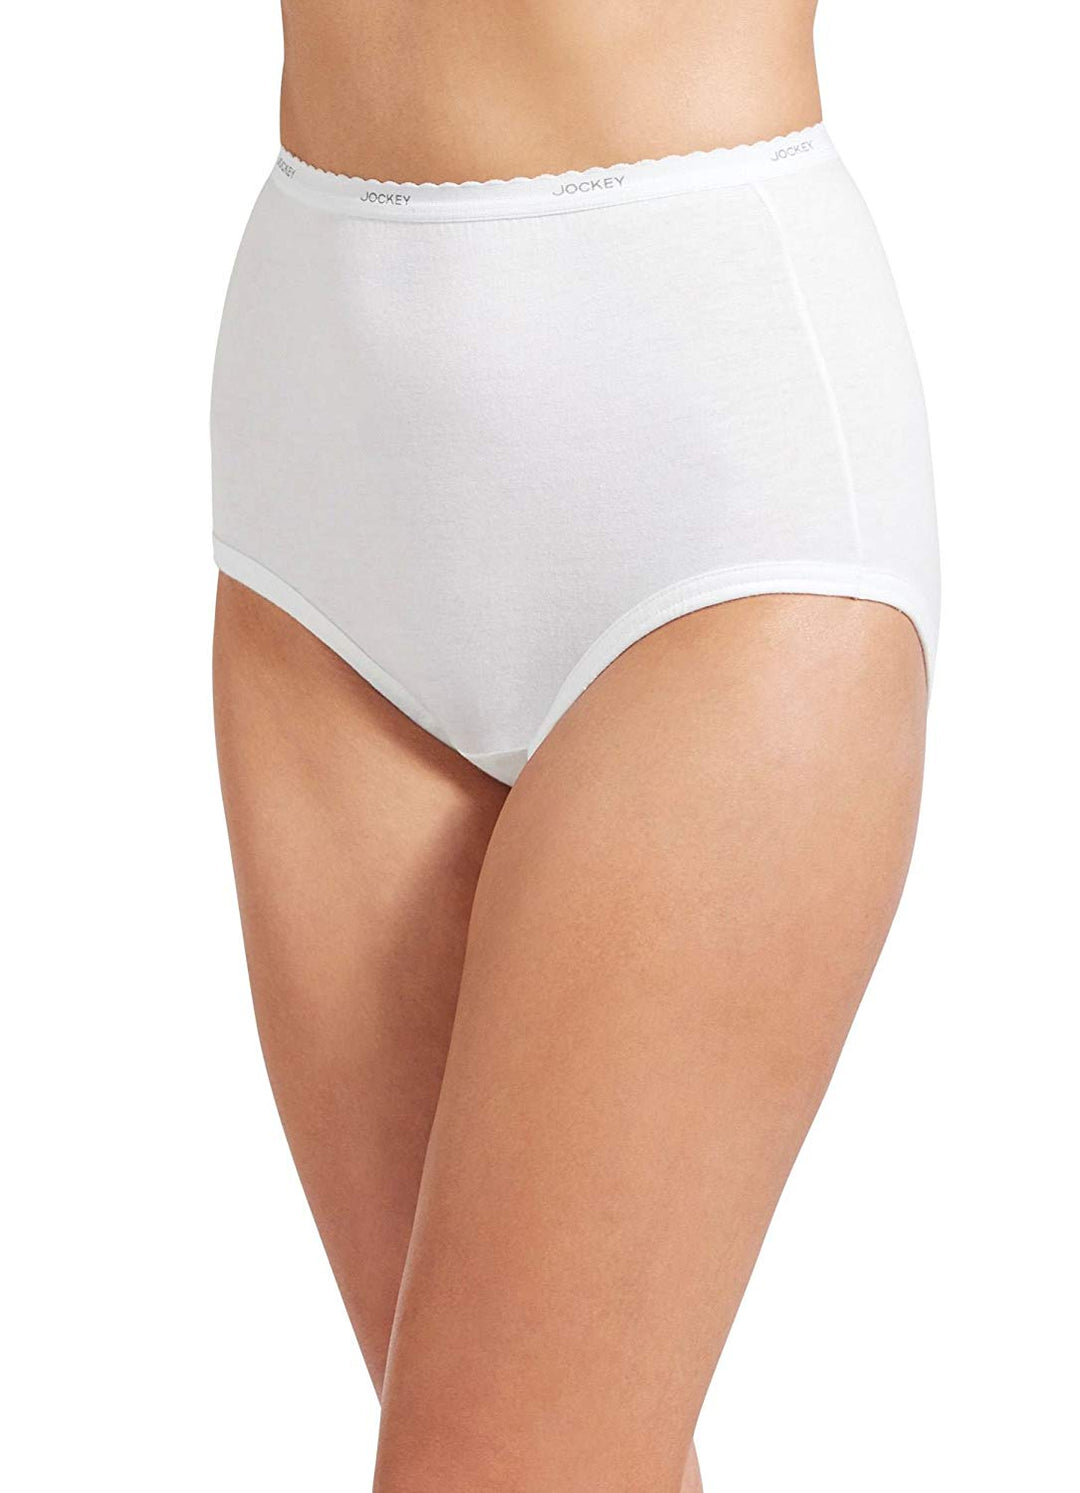 Cheap Charmleaks Women's Cotton Underwear Plus Size Briefs Mid